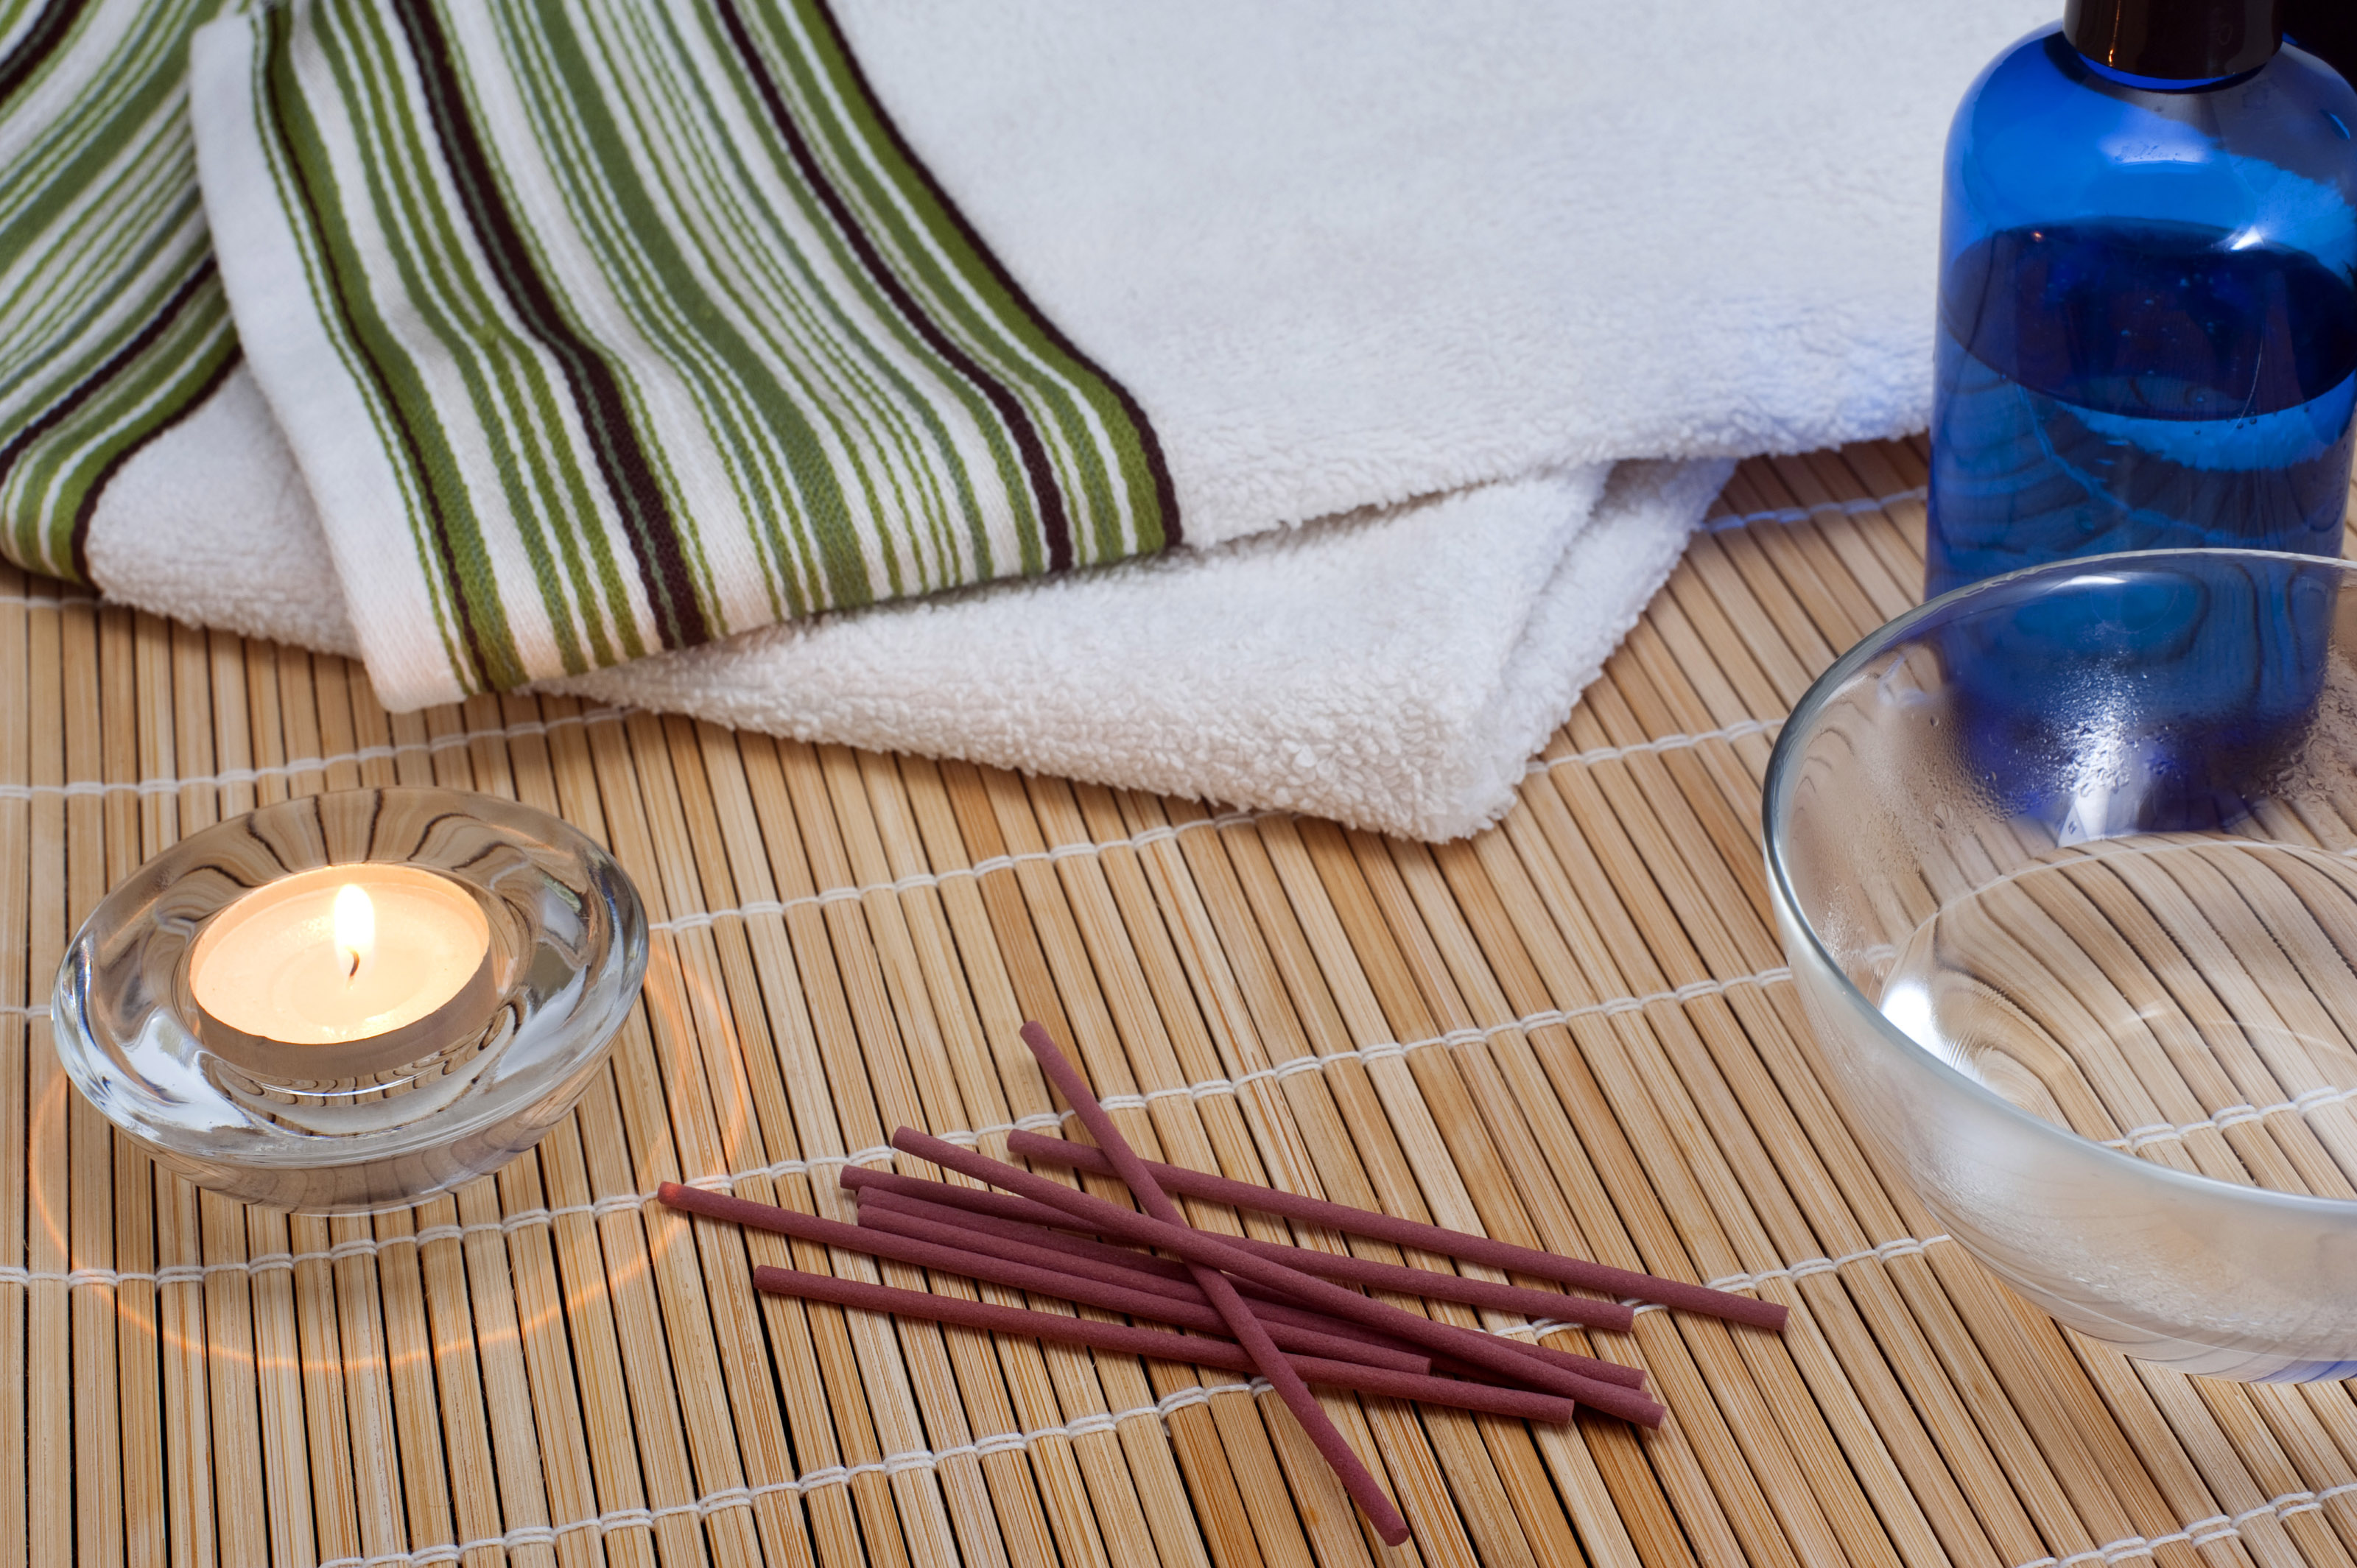 free-stock-photo-4556-aromatherapy-massage-oil-freeimageslive